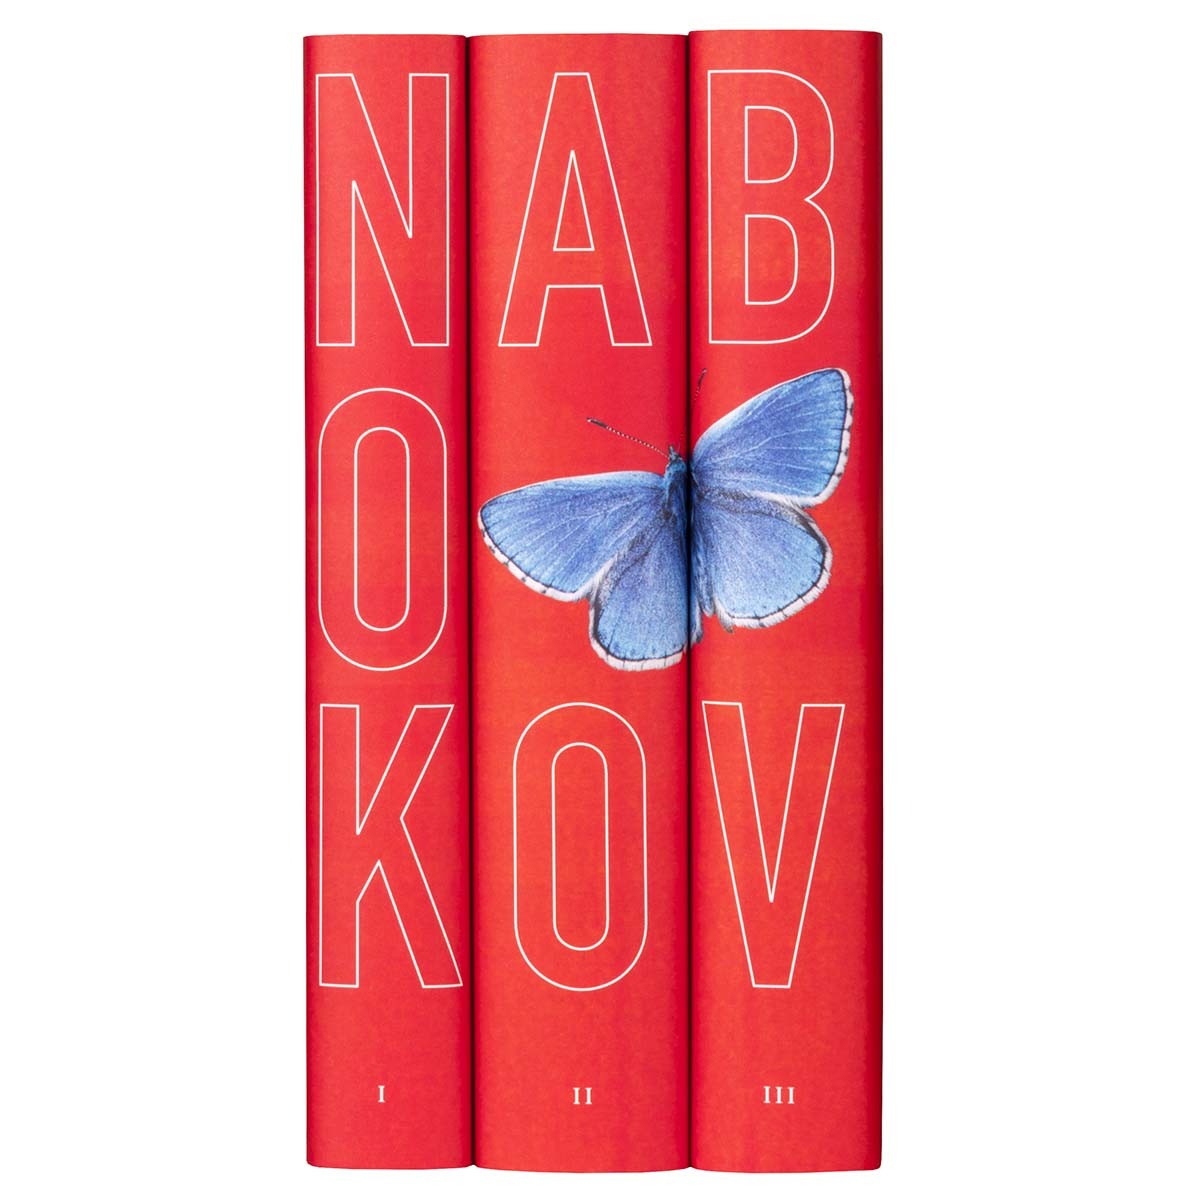 Vladimir Nabokov Books